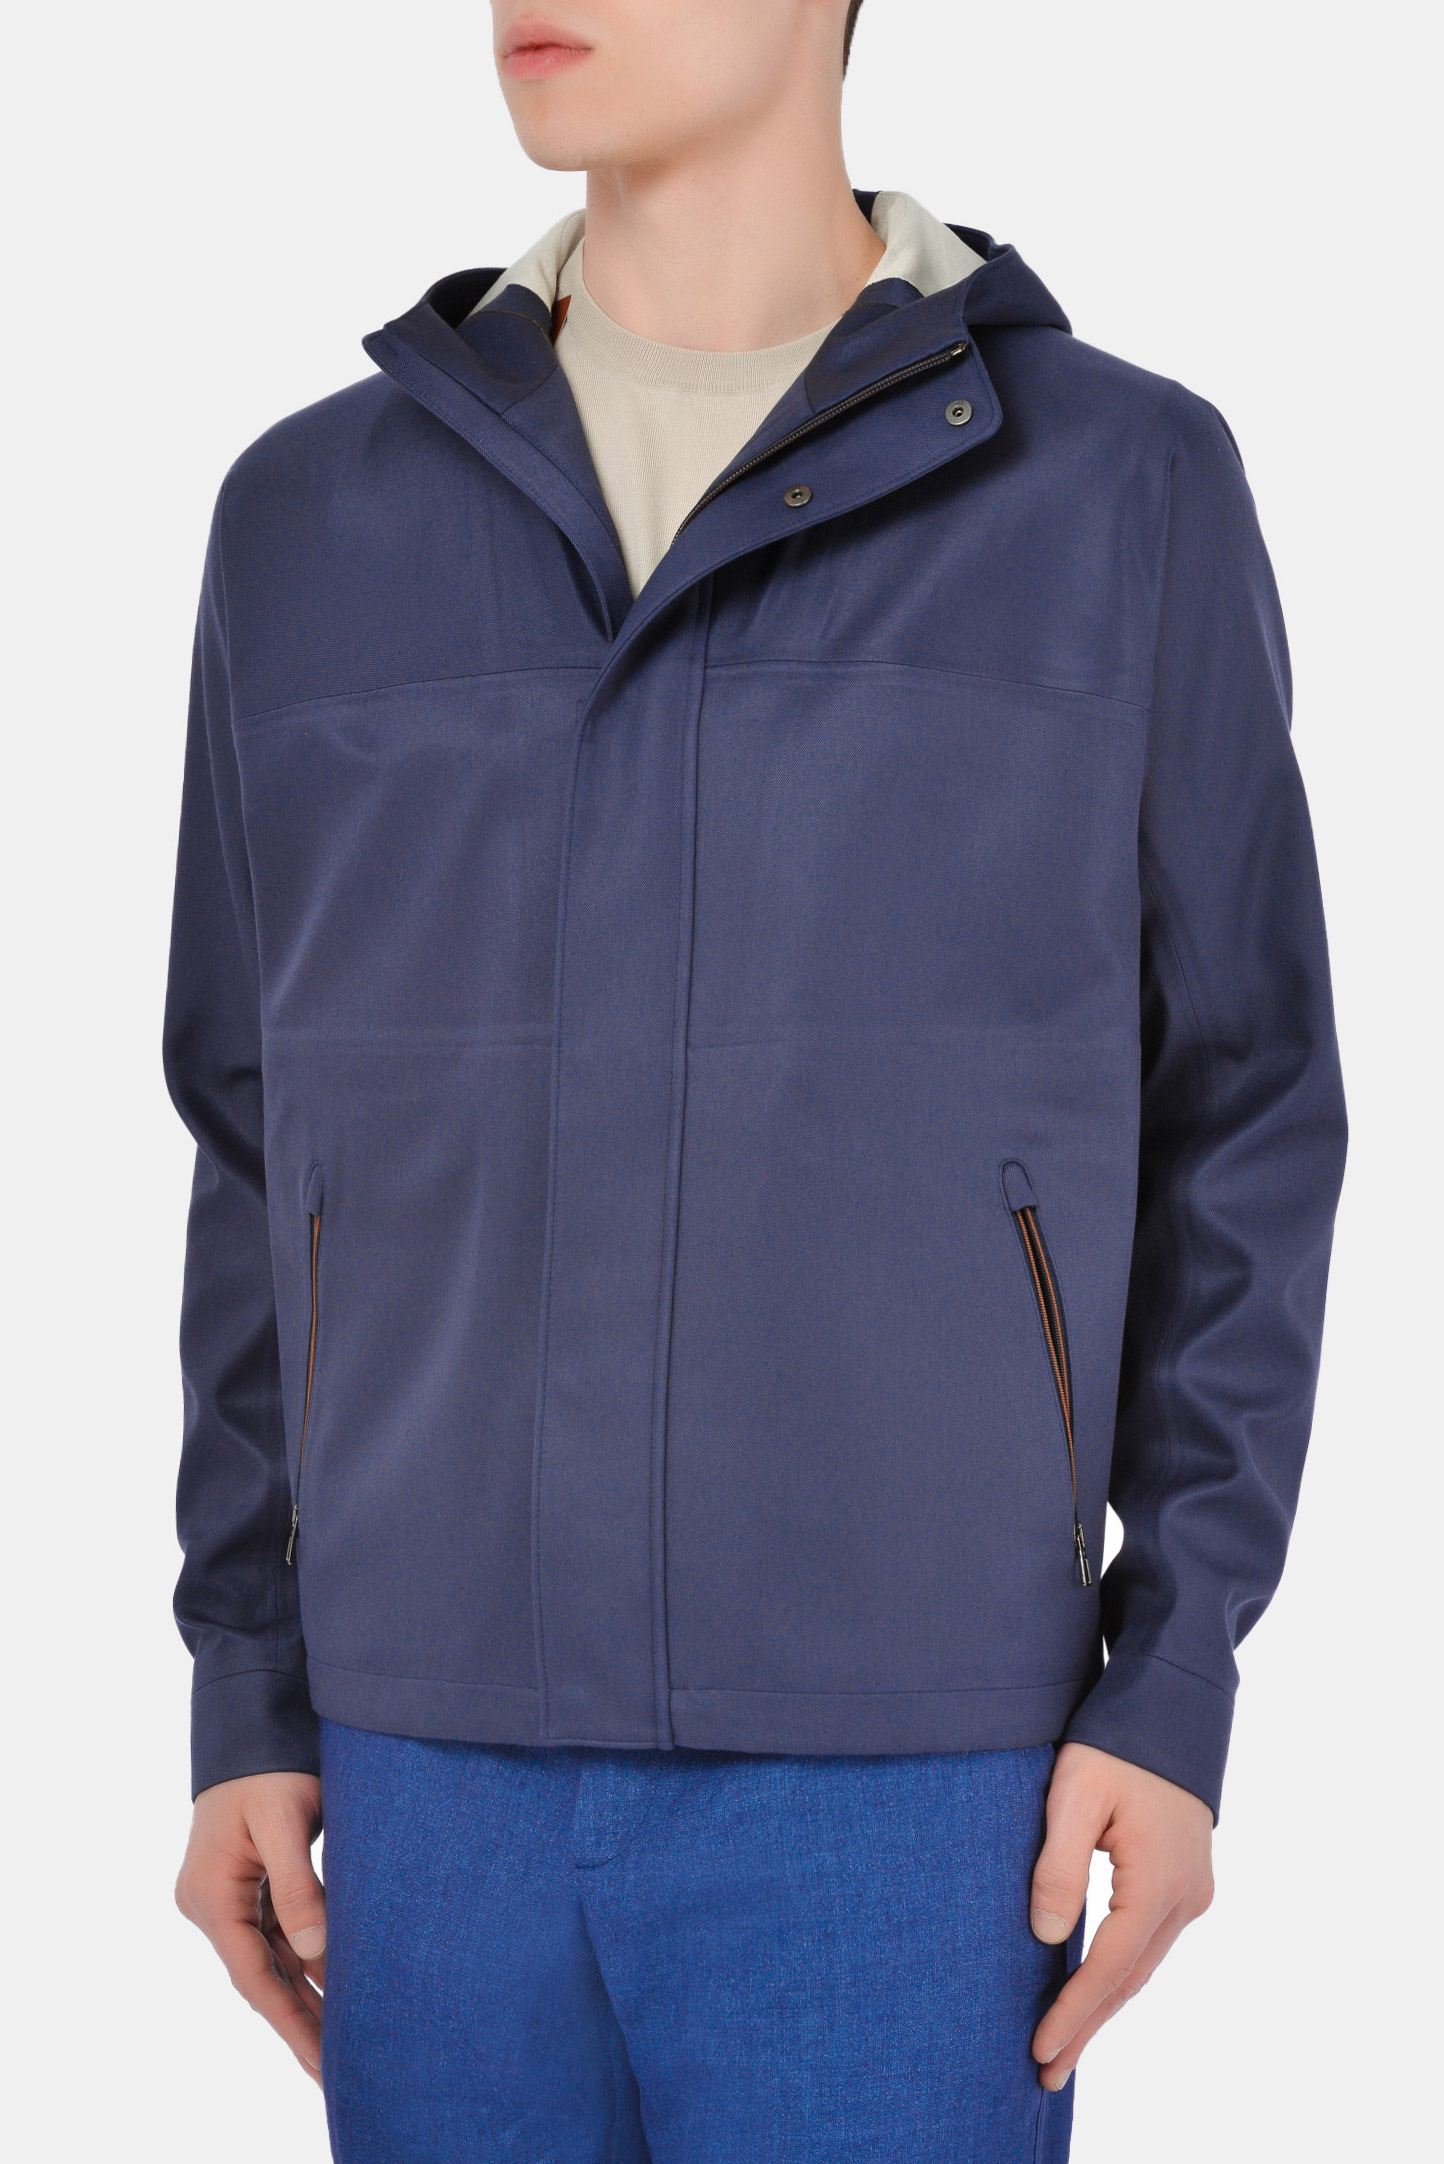 Куртка LORO PIANA F1-FAL5164, цвет: Синий, Мужской